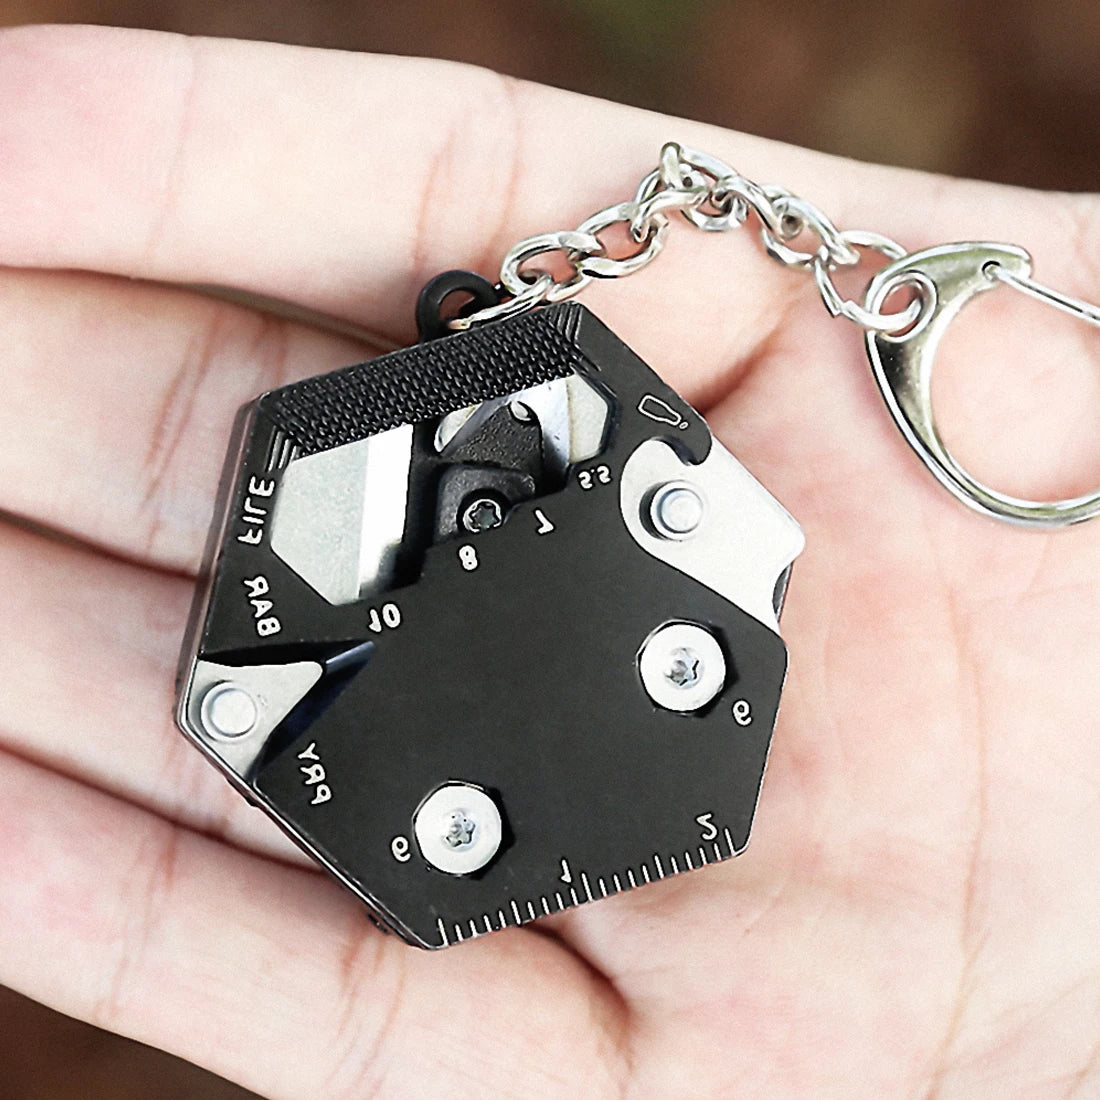 Multitool Keychain Hexagonal Kit Folding Mini Pocket Survival Tool Set Stainless Steel, Gift to Father, Husband